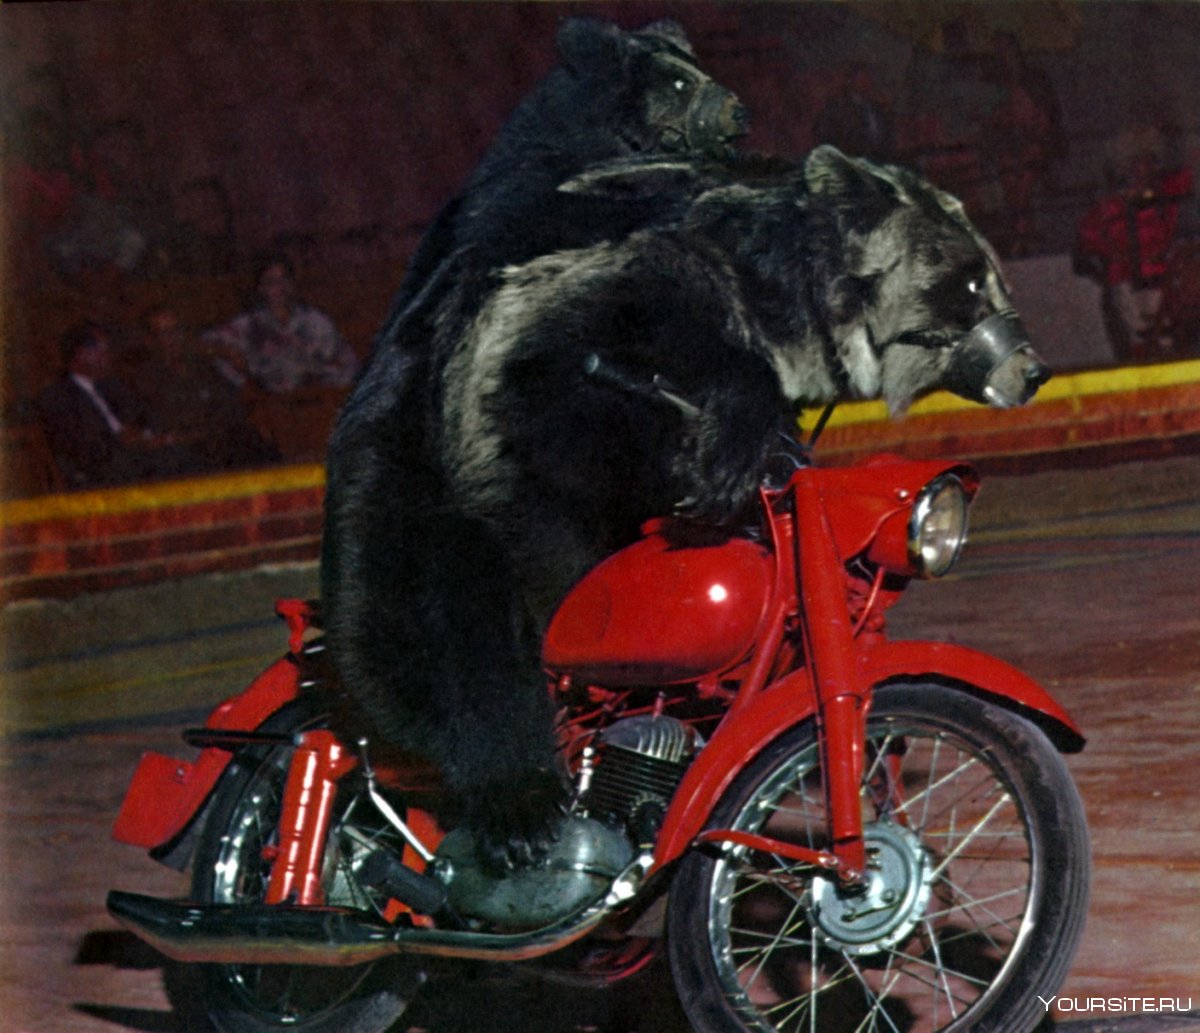 Медведь на мотоцикле в цирке